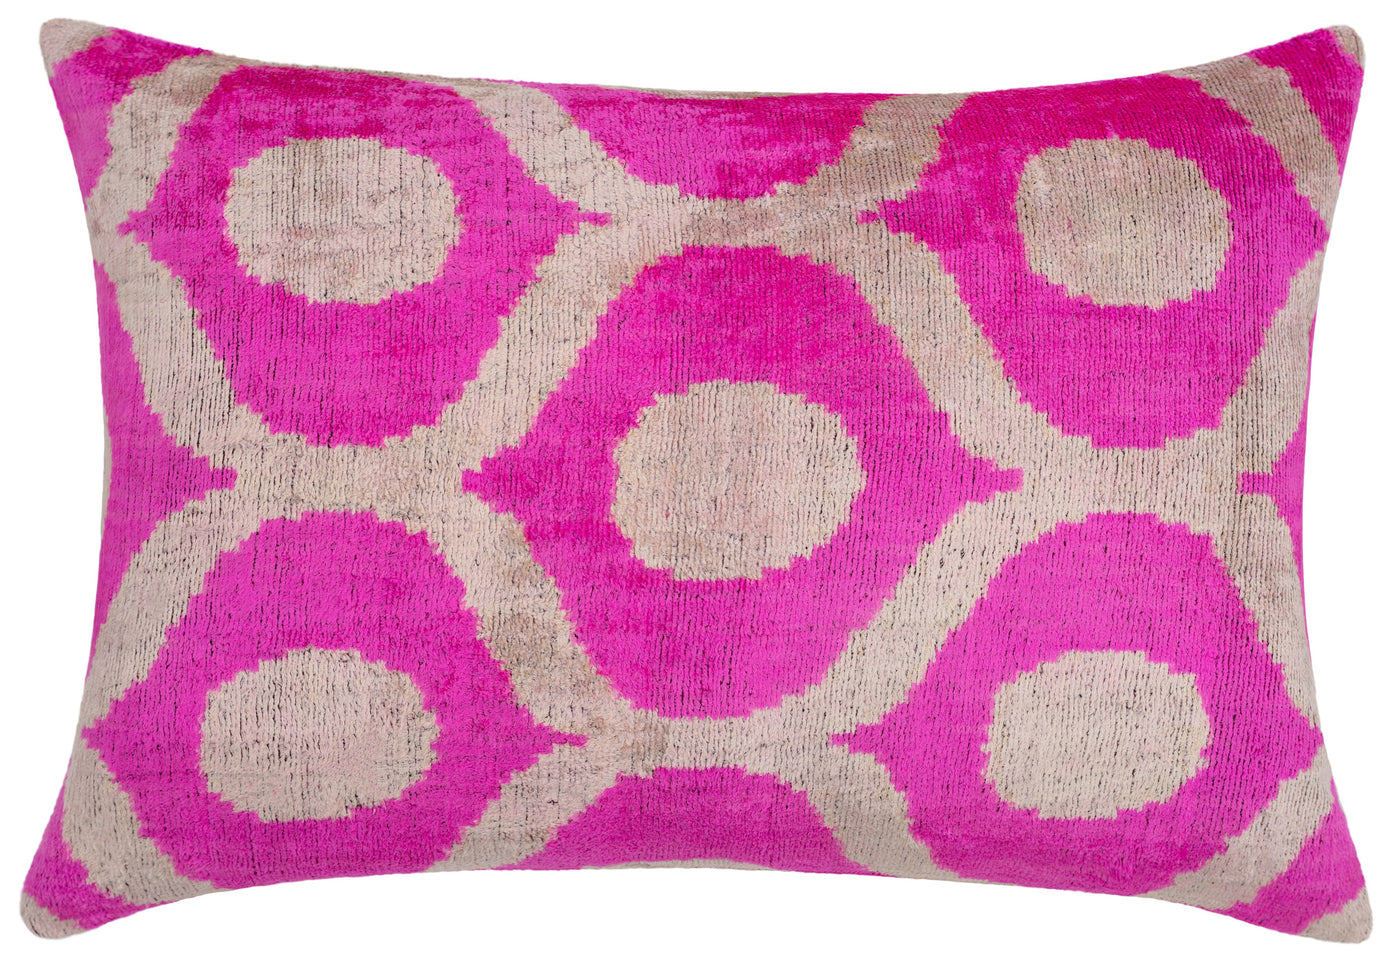 Canvello Vibrant 16x24 in Pink Geometric Trellis Throw Pillow - Modern Fuchsia and White Plush Cushion for Home Décor